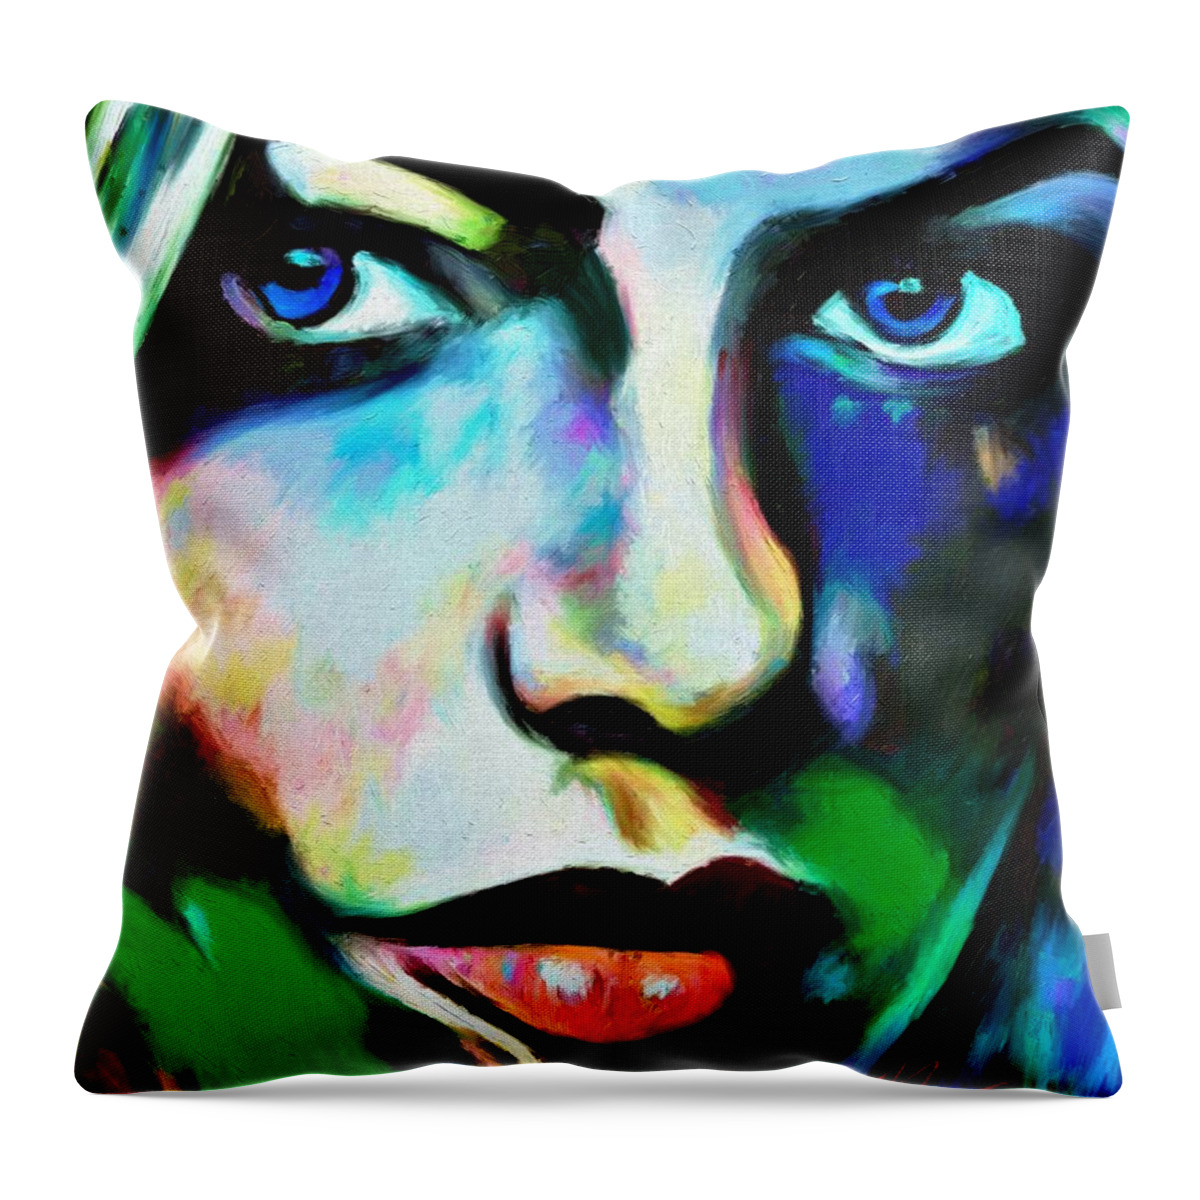 Portrait Throw Pillow featuring the painting Sensual Beauty Portrait Jolie by James Shepherd